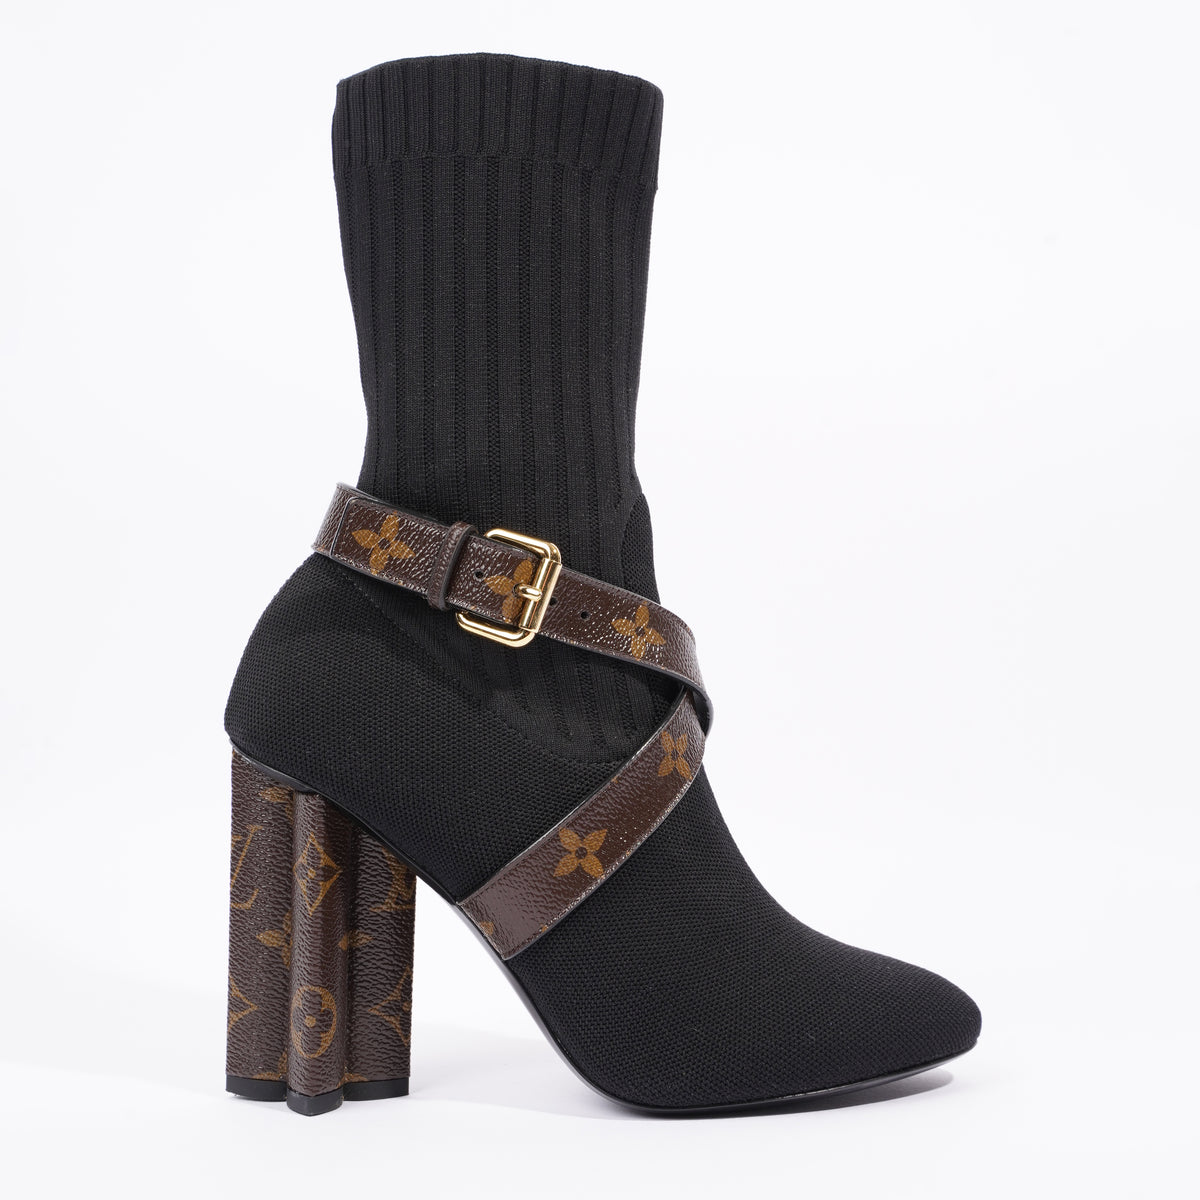 Authentic Louis-Vuitton silhouette ankle boots